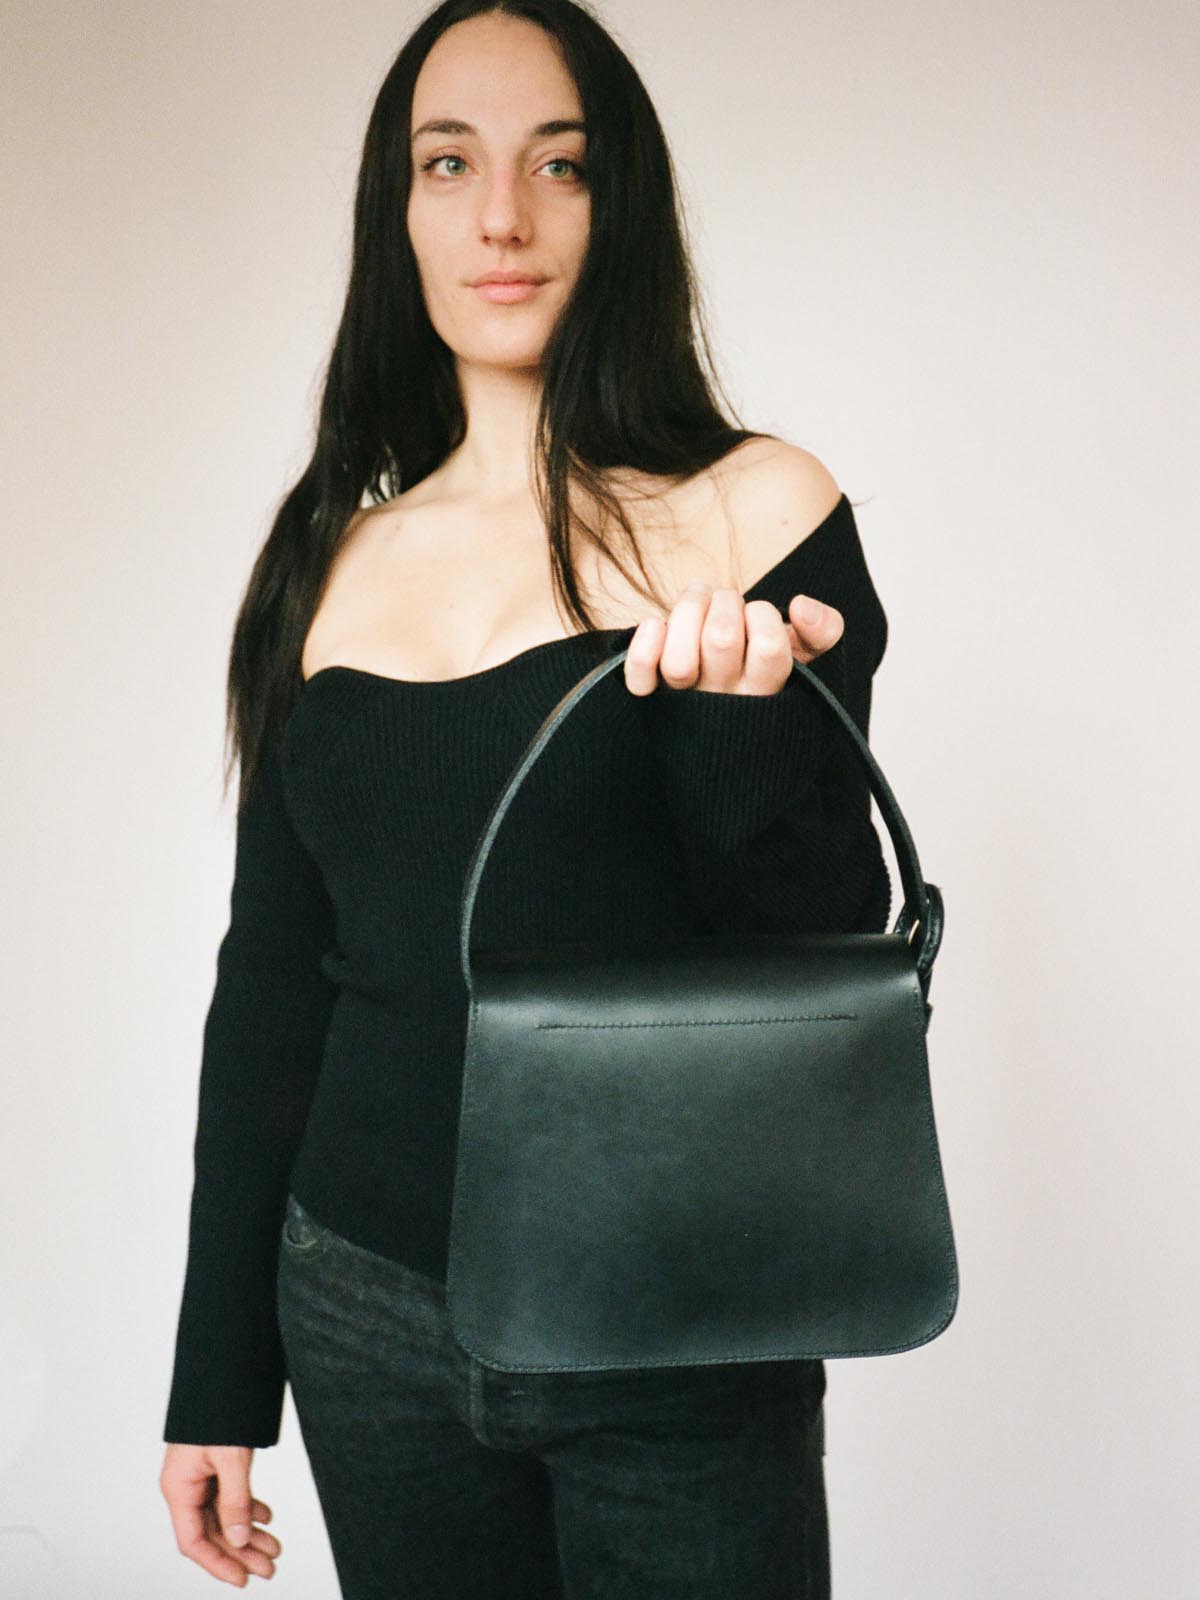 Estel Bag in Black by Crescioni on girl